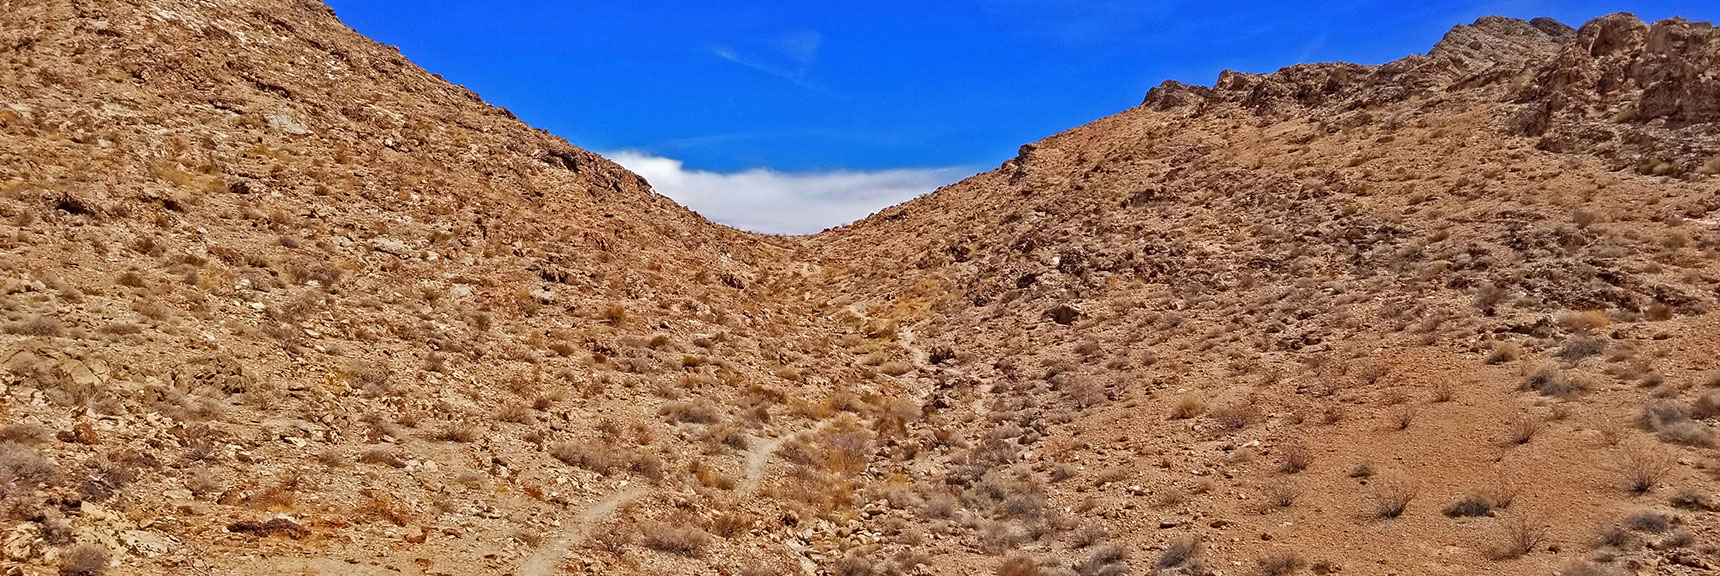 Heading Up the First Gully to Its Saddle | Sunrise Mountain, Las Vegas, Nevada